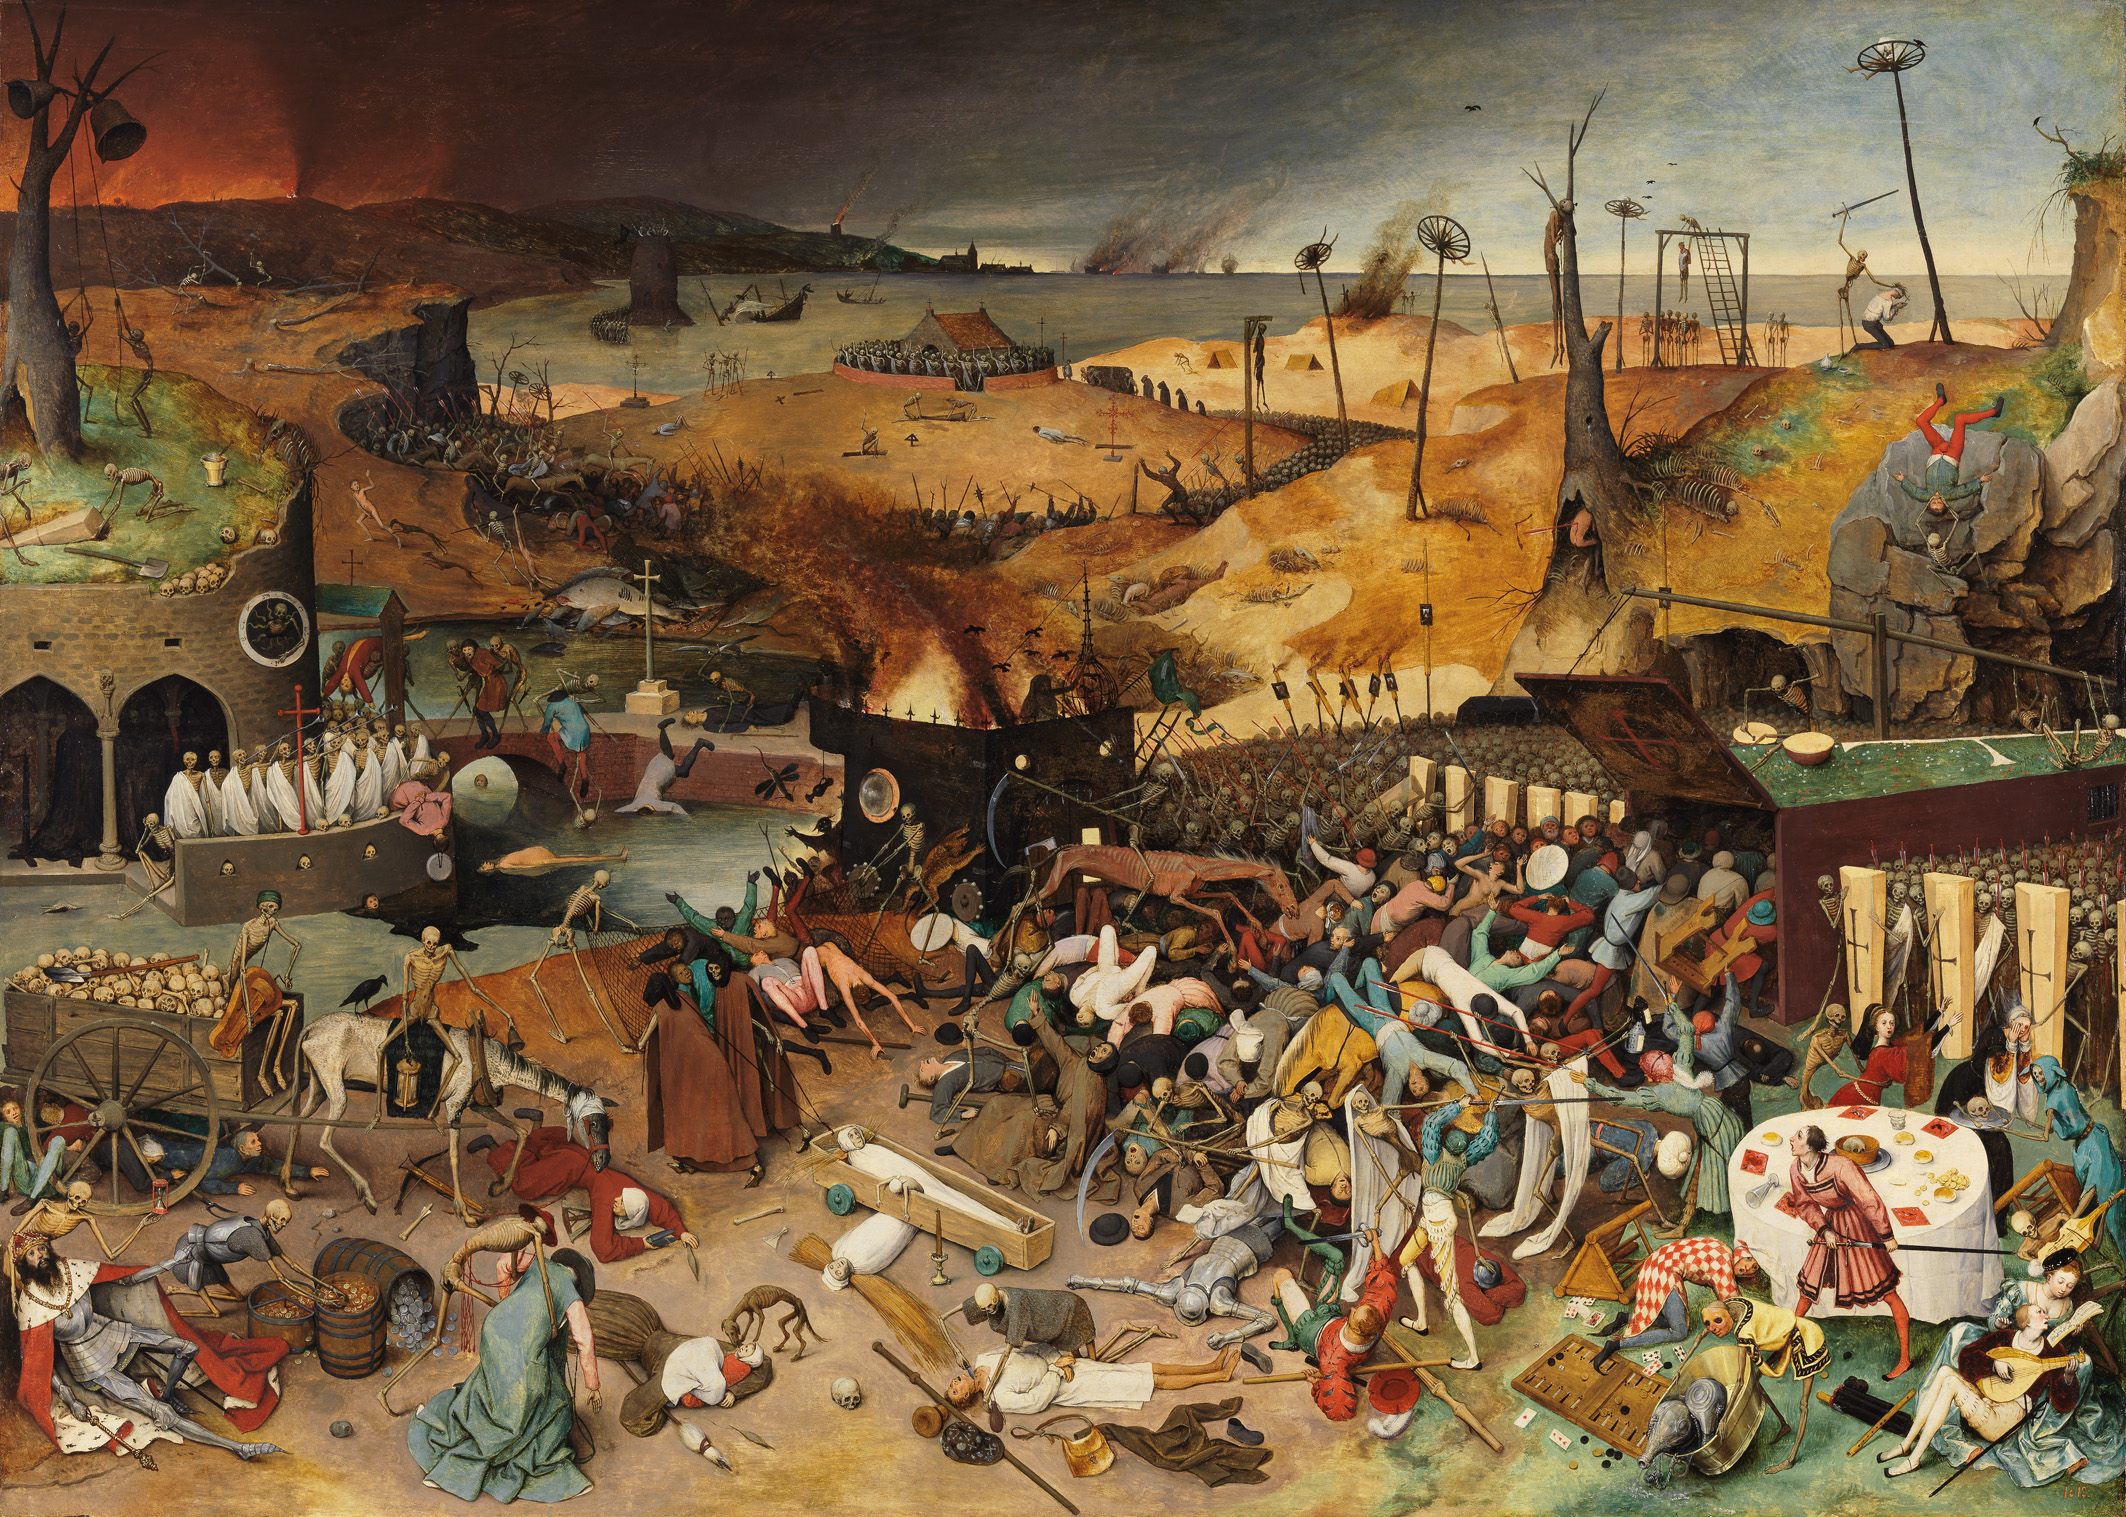 The Triumph of Death, by Pieter Bruegel the Elder